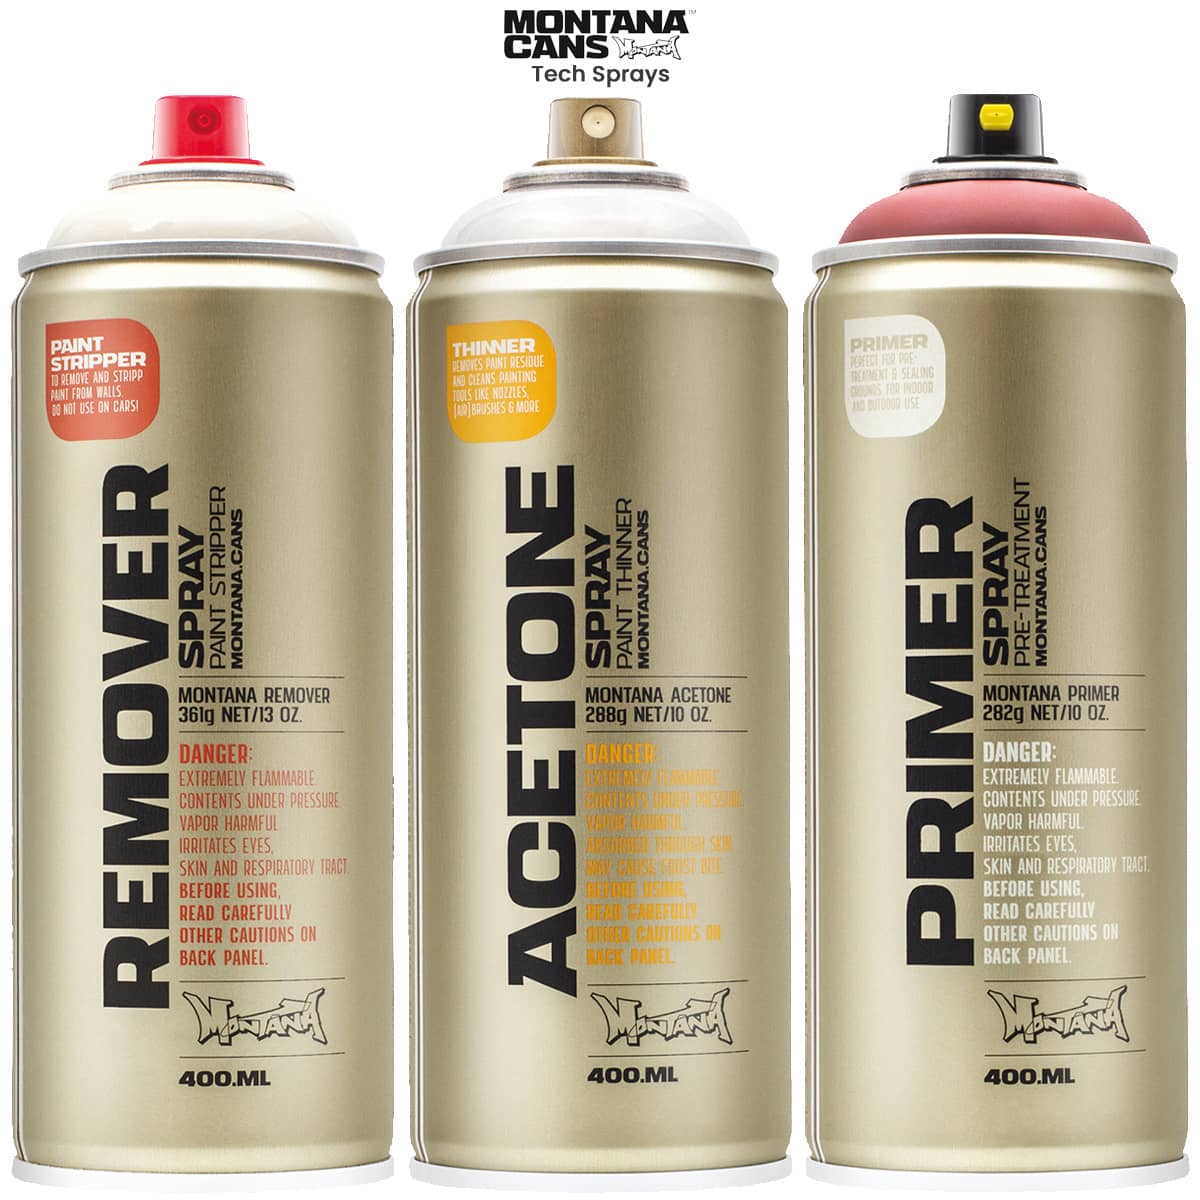 Montana Gold Premium Spray Paint 400ml Main Colors Set of 12